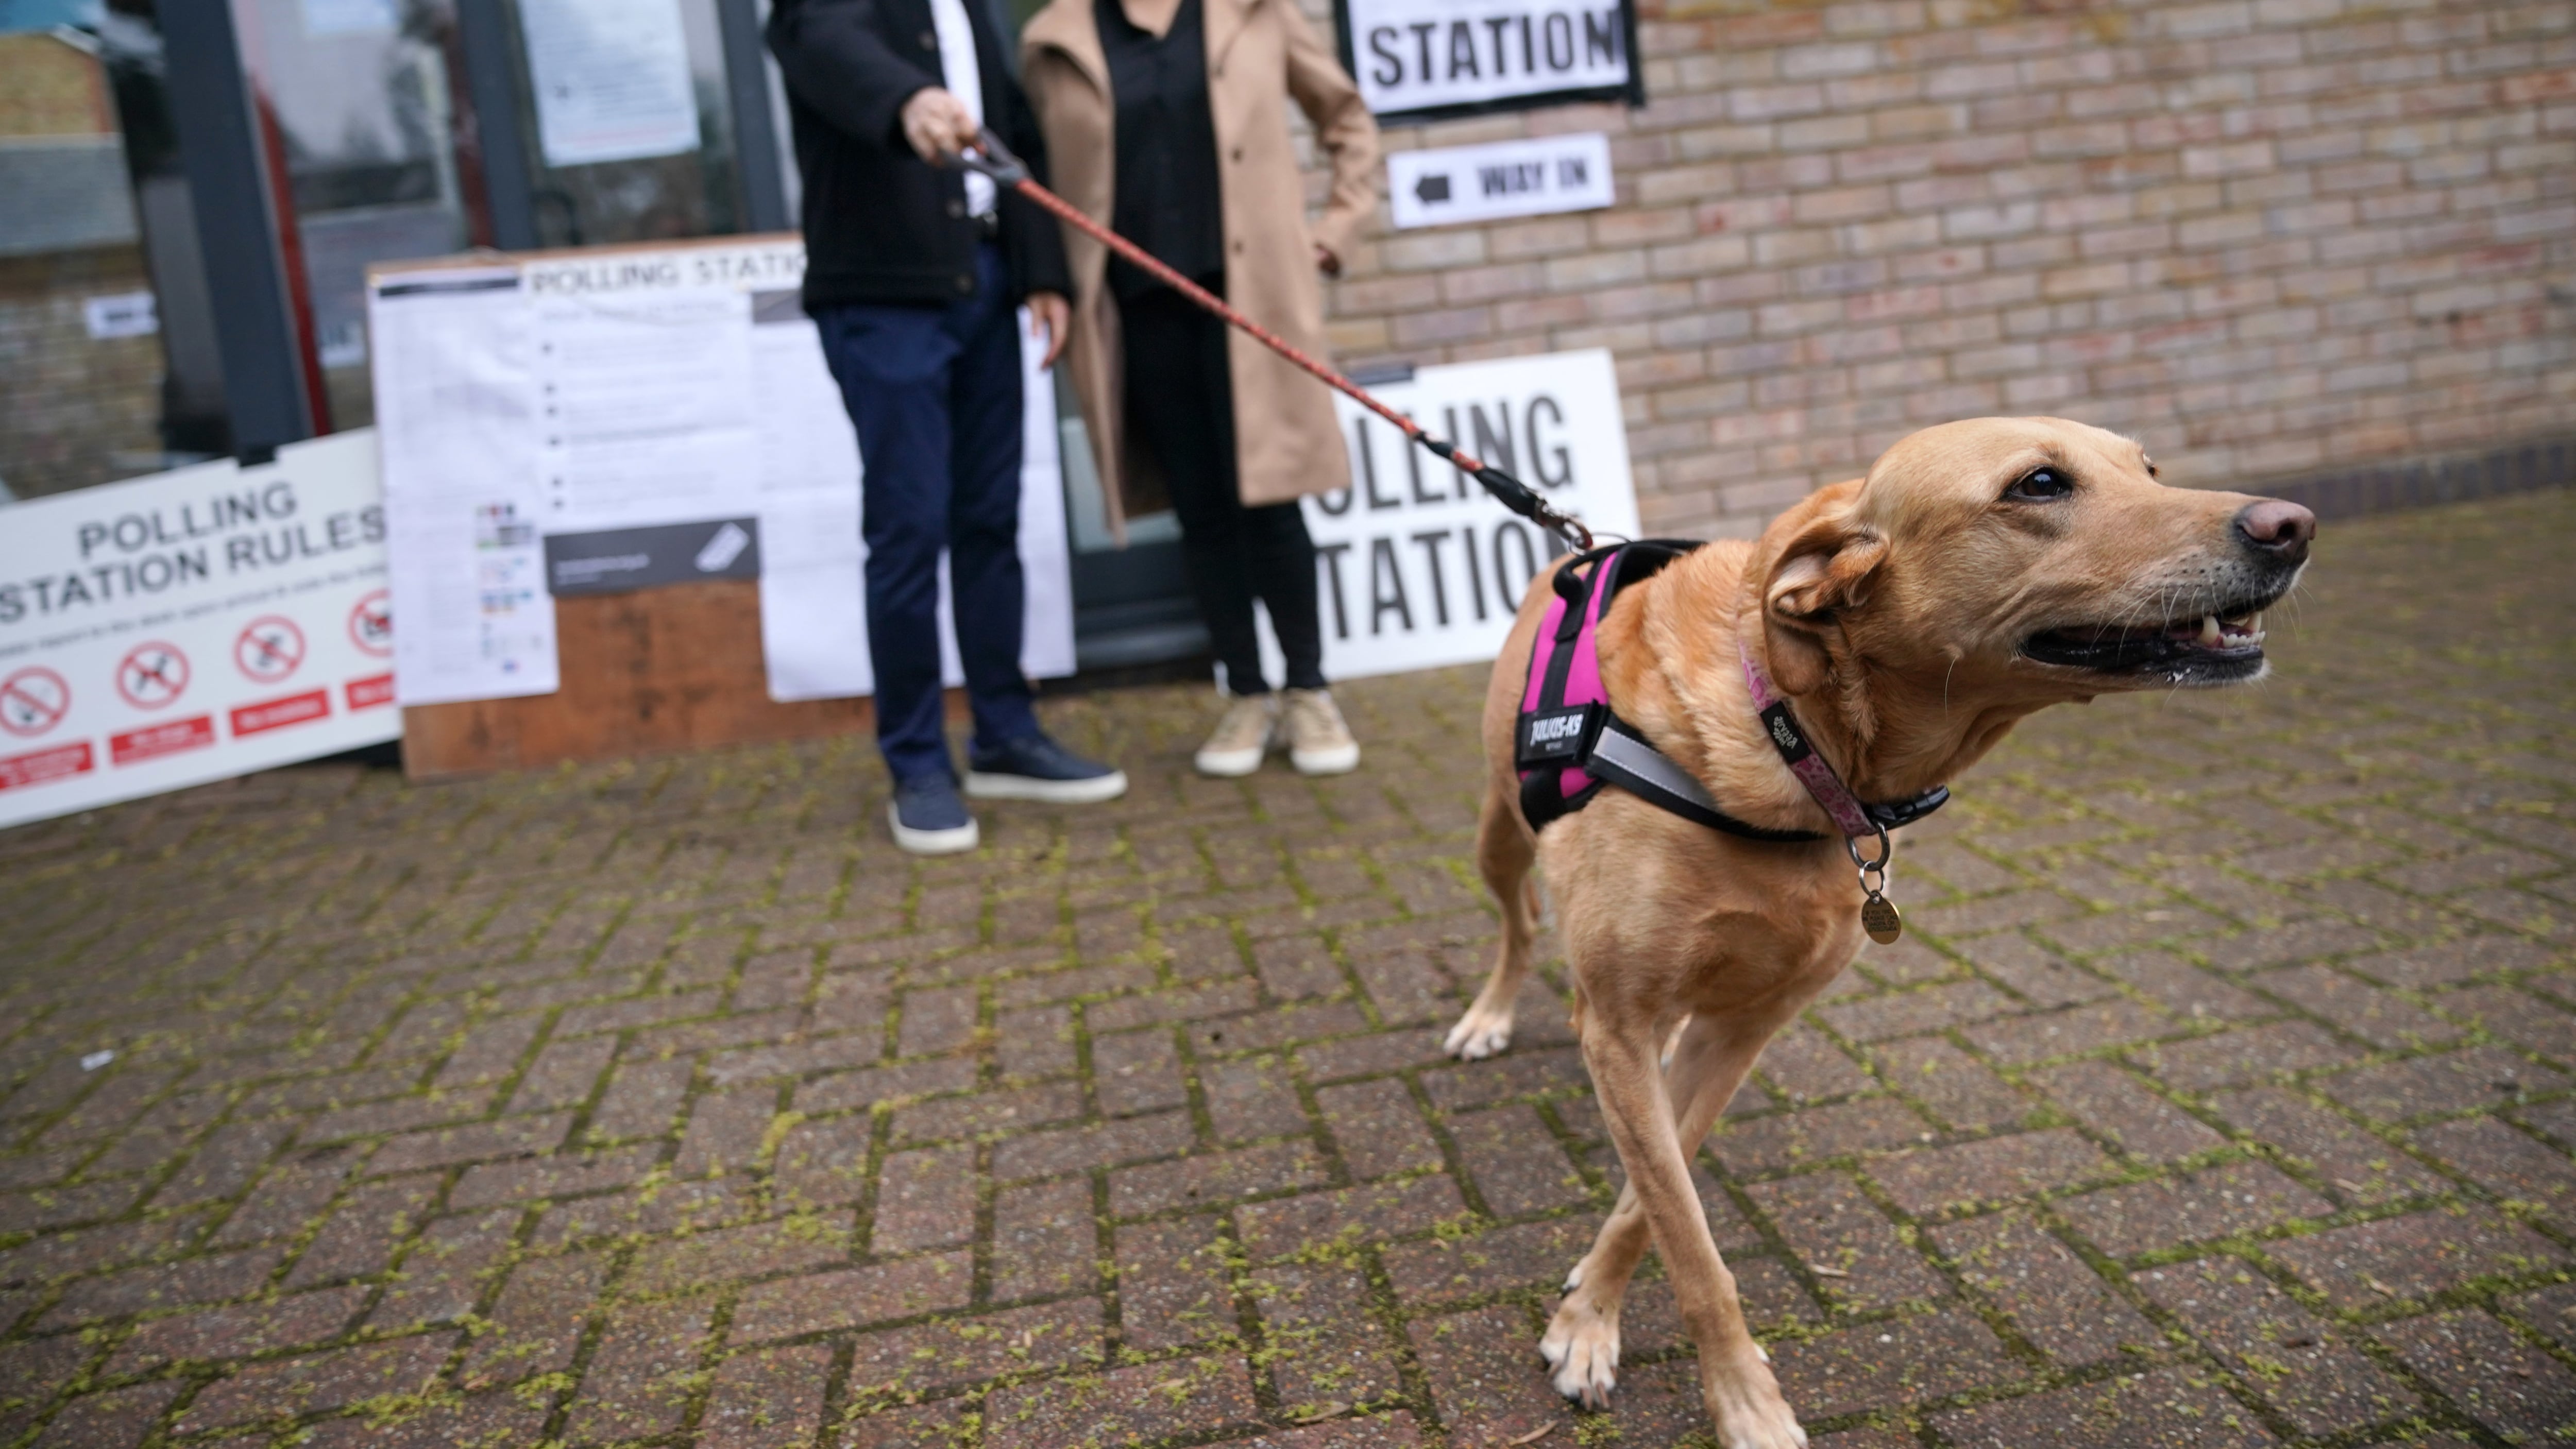 Sadiq Khan with his wife Saadiya Khan and dog Luna visited a polling station in south London